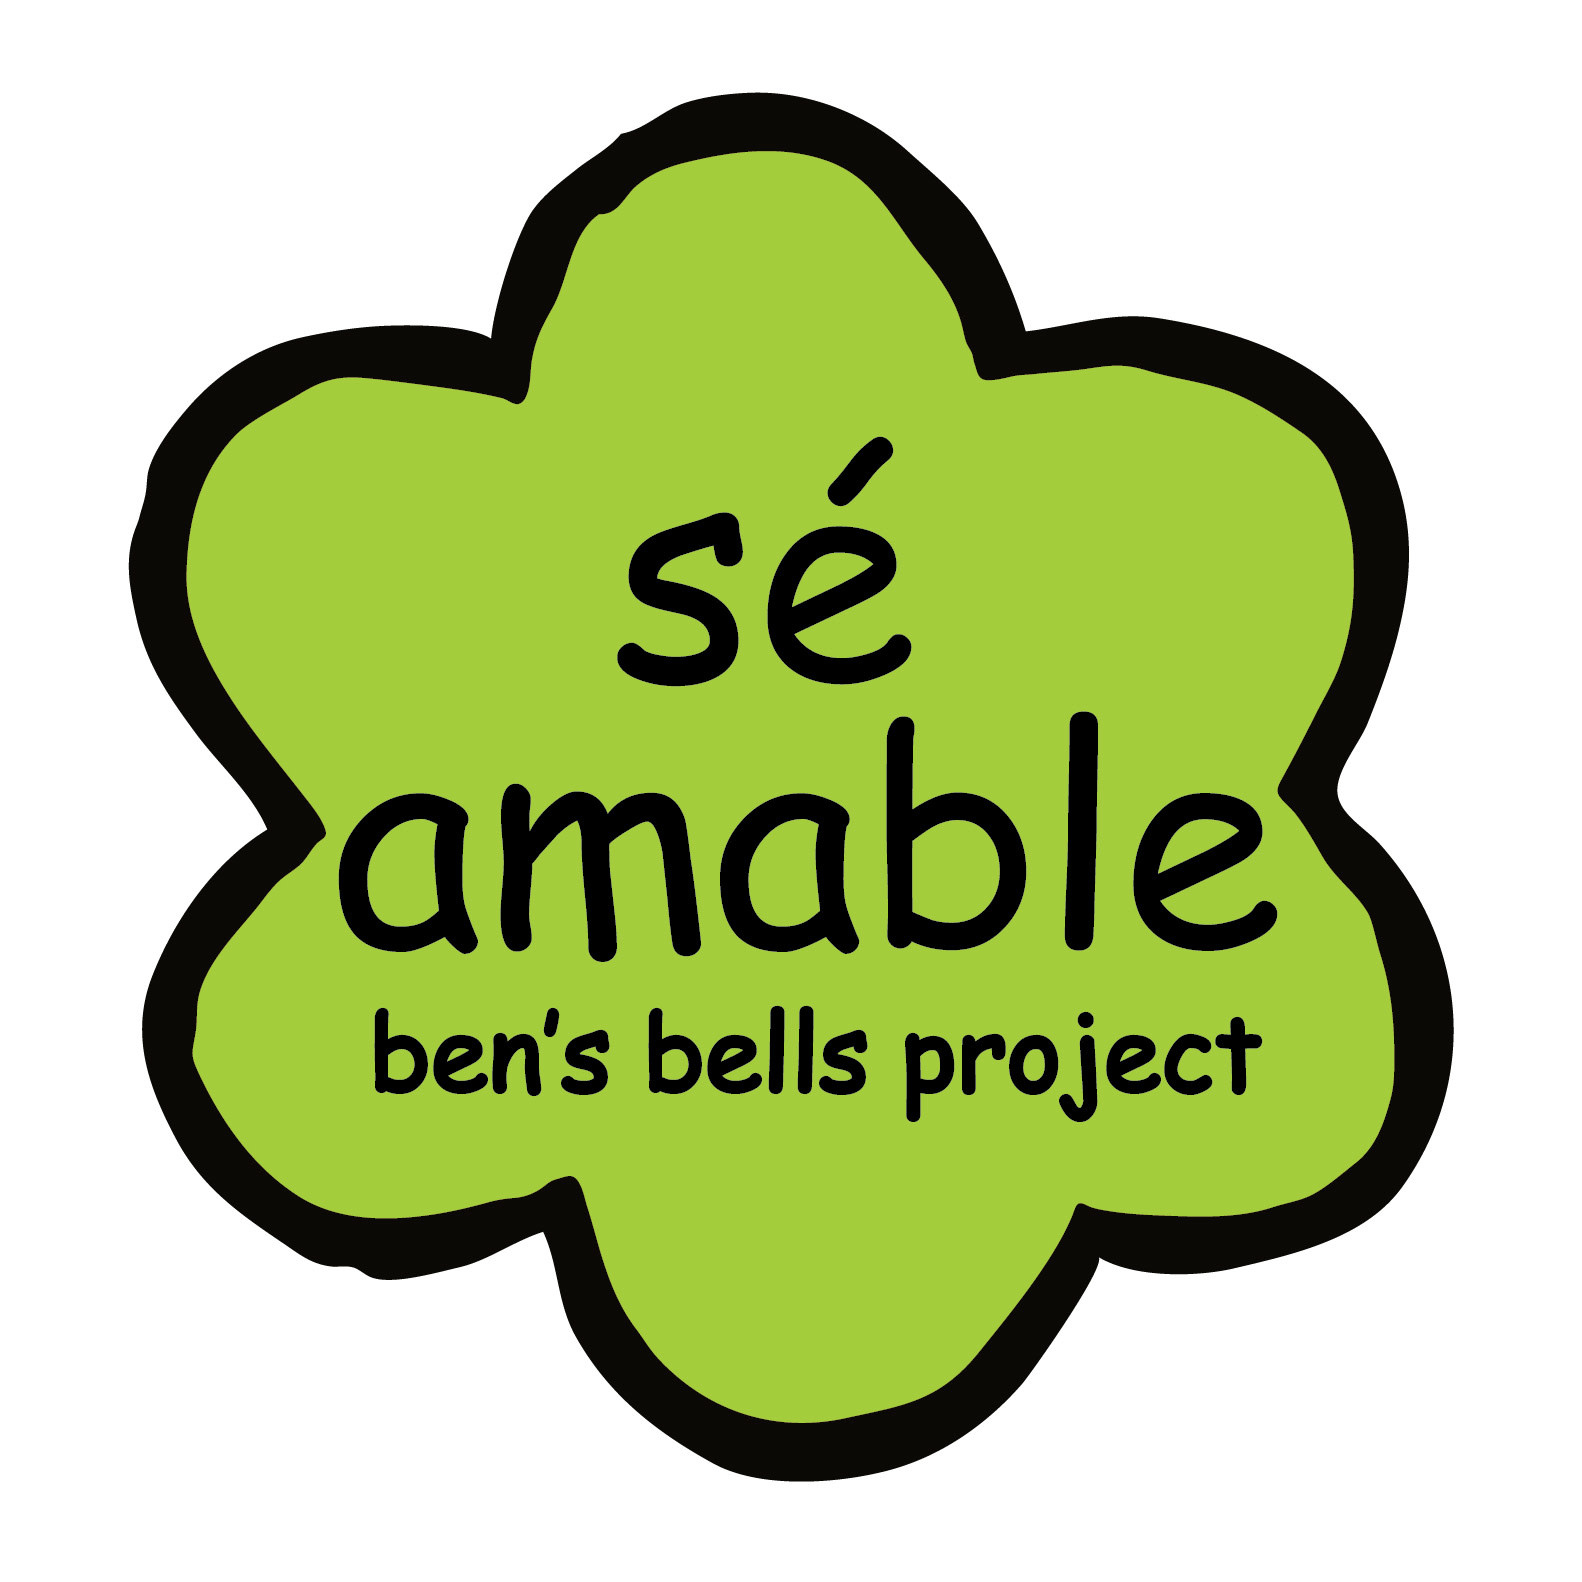 Ben's Bells Vinyl Sticker - sé amable flower